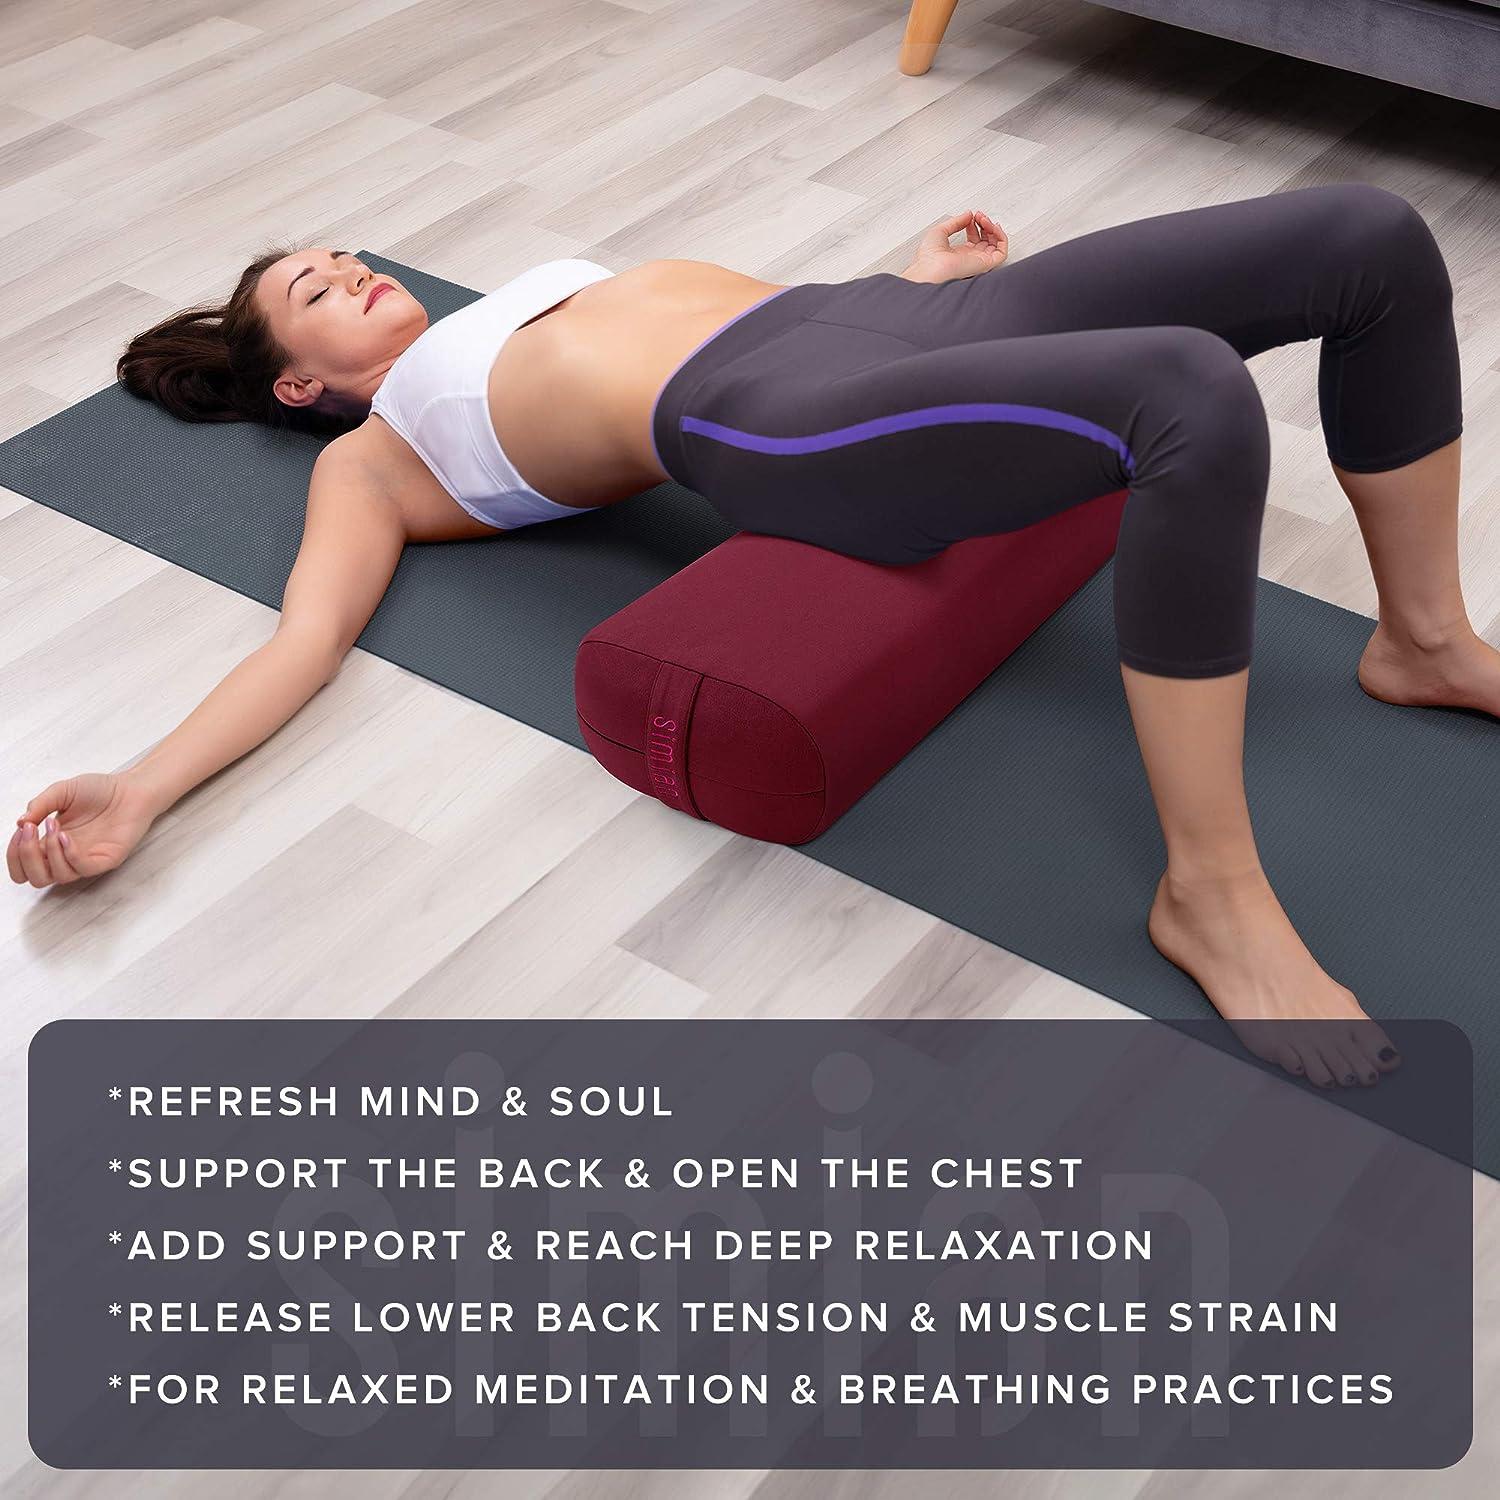  Everyday Yoga Bolster Rectangular Meditation Pillow